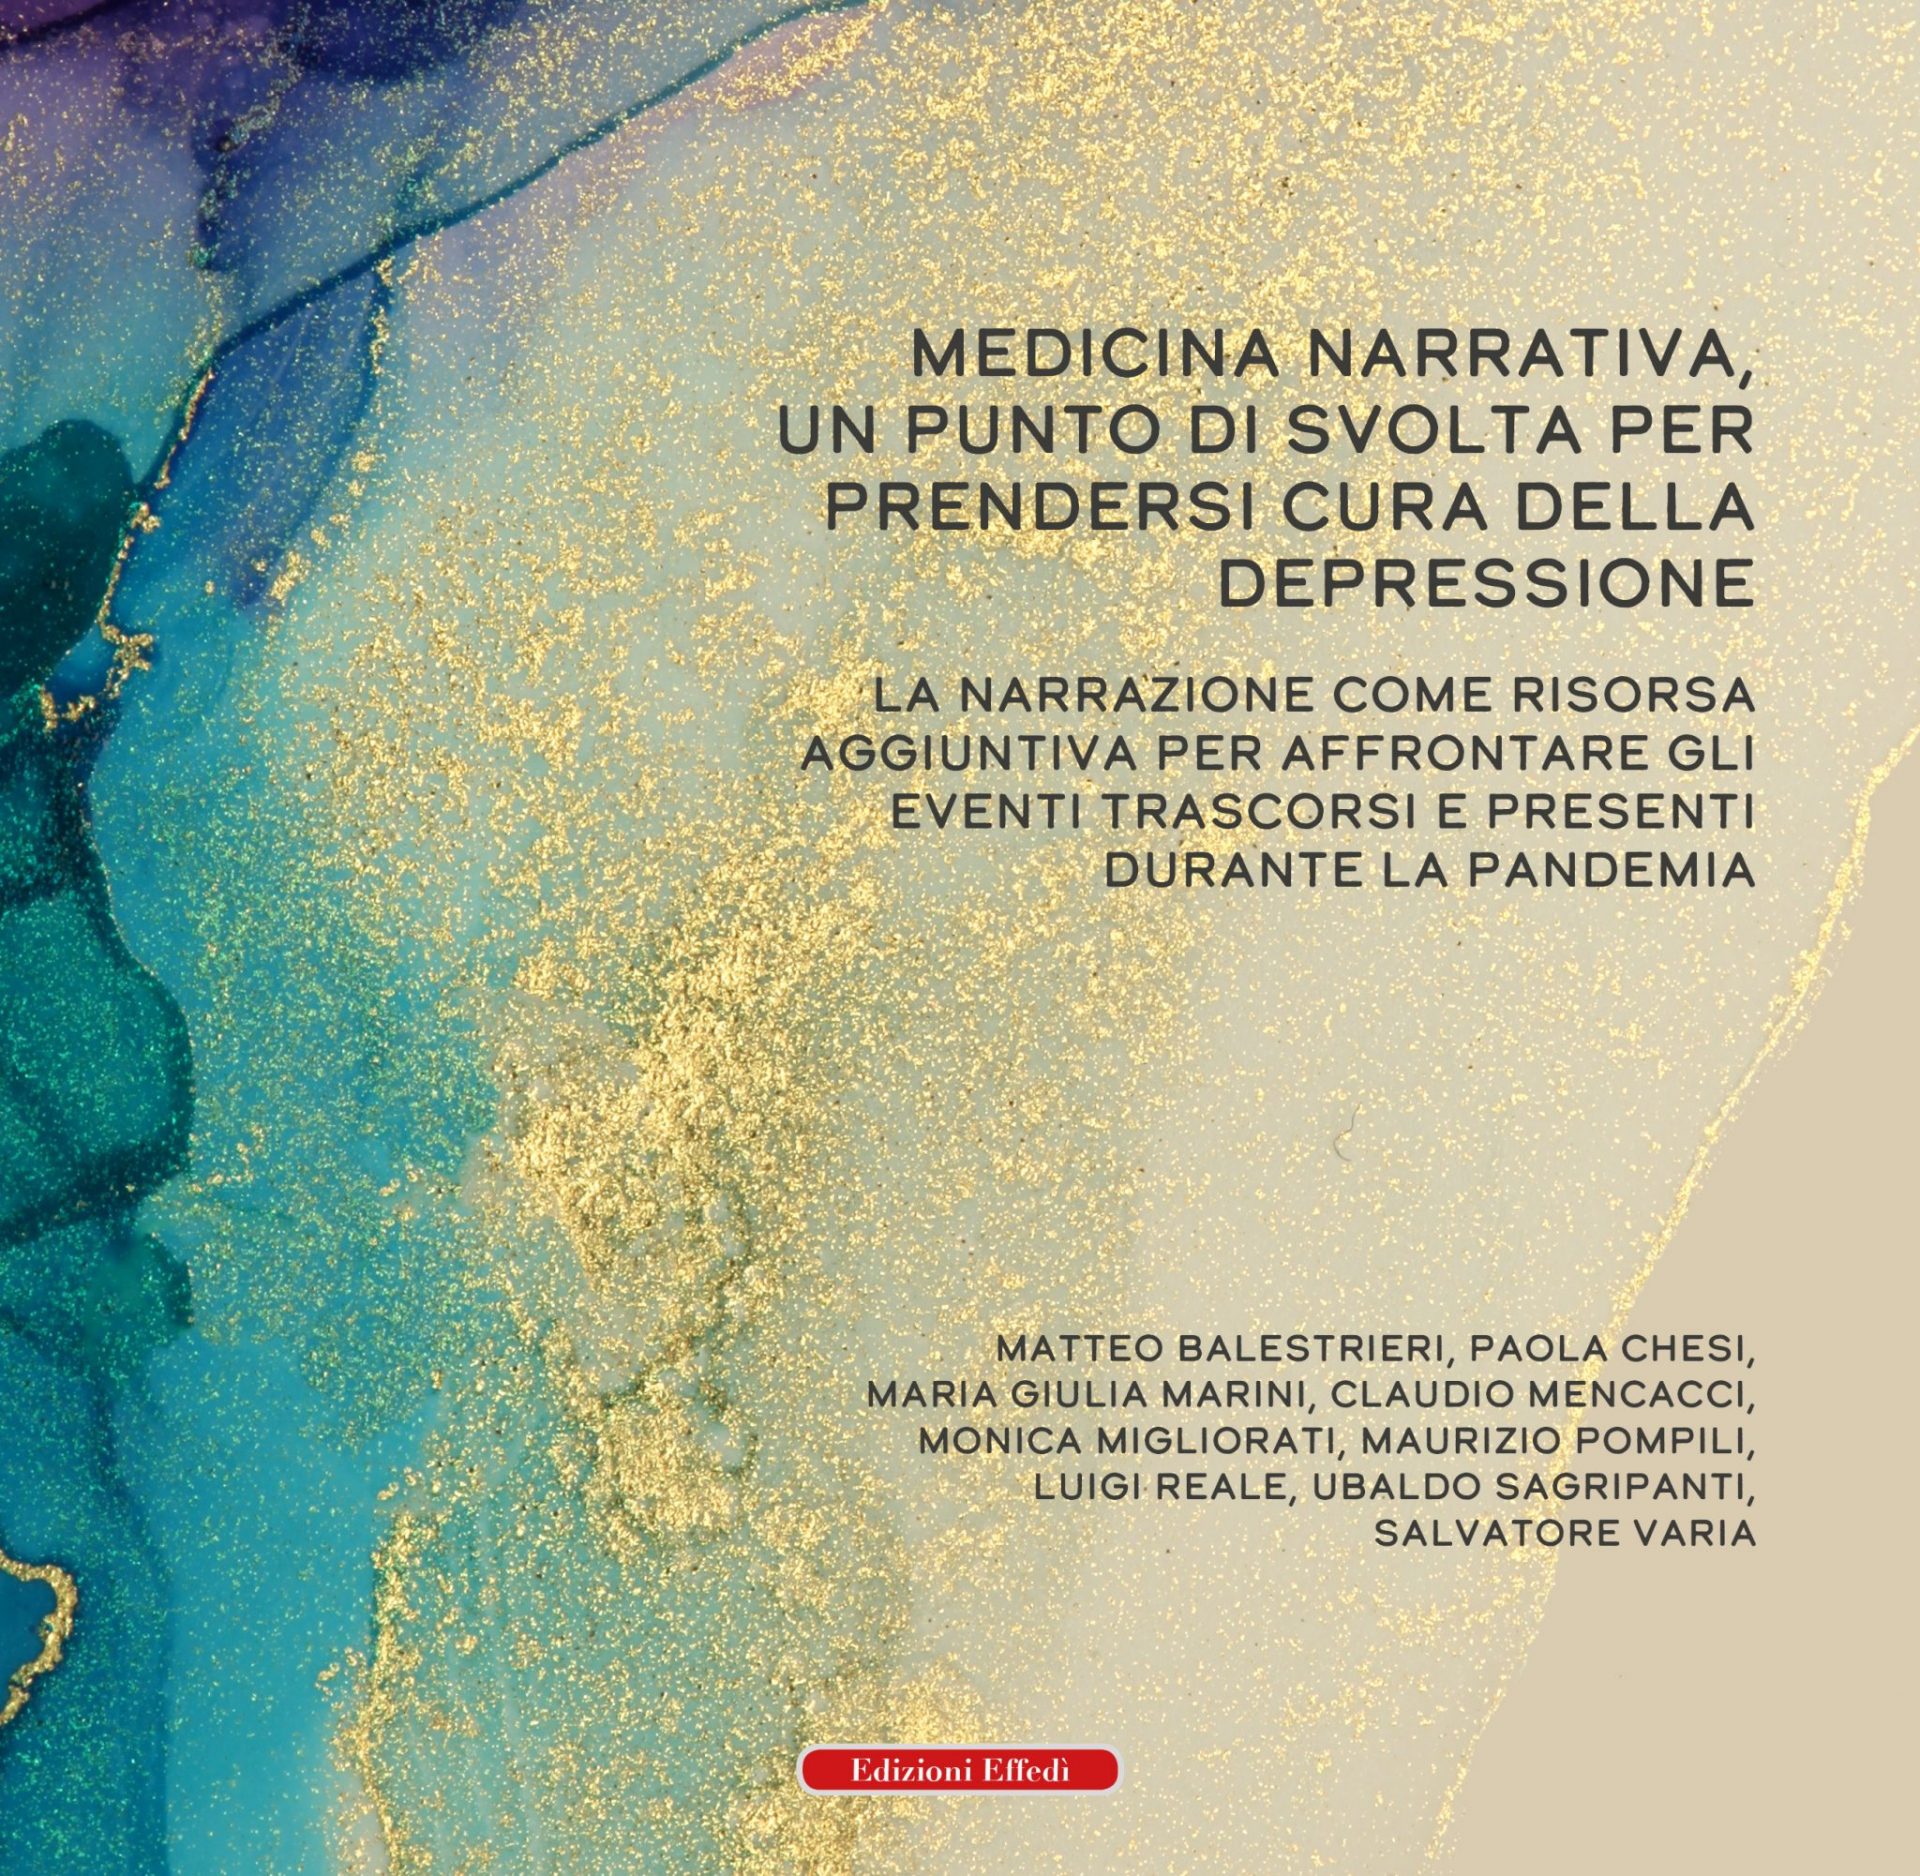 copertina volume medicina narrativa e depressione